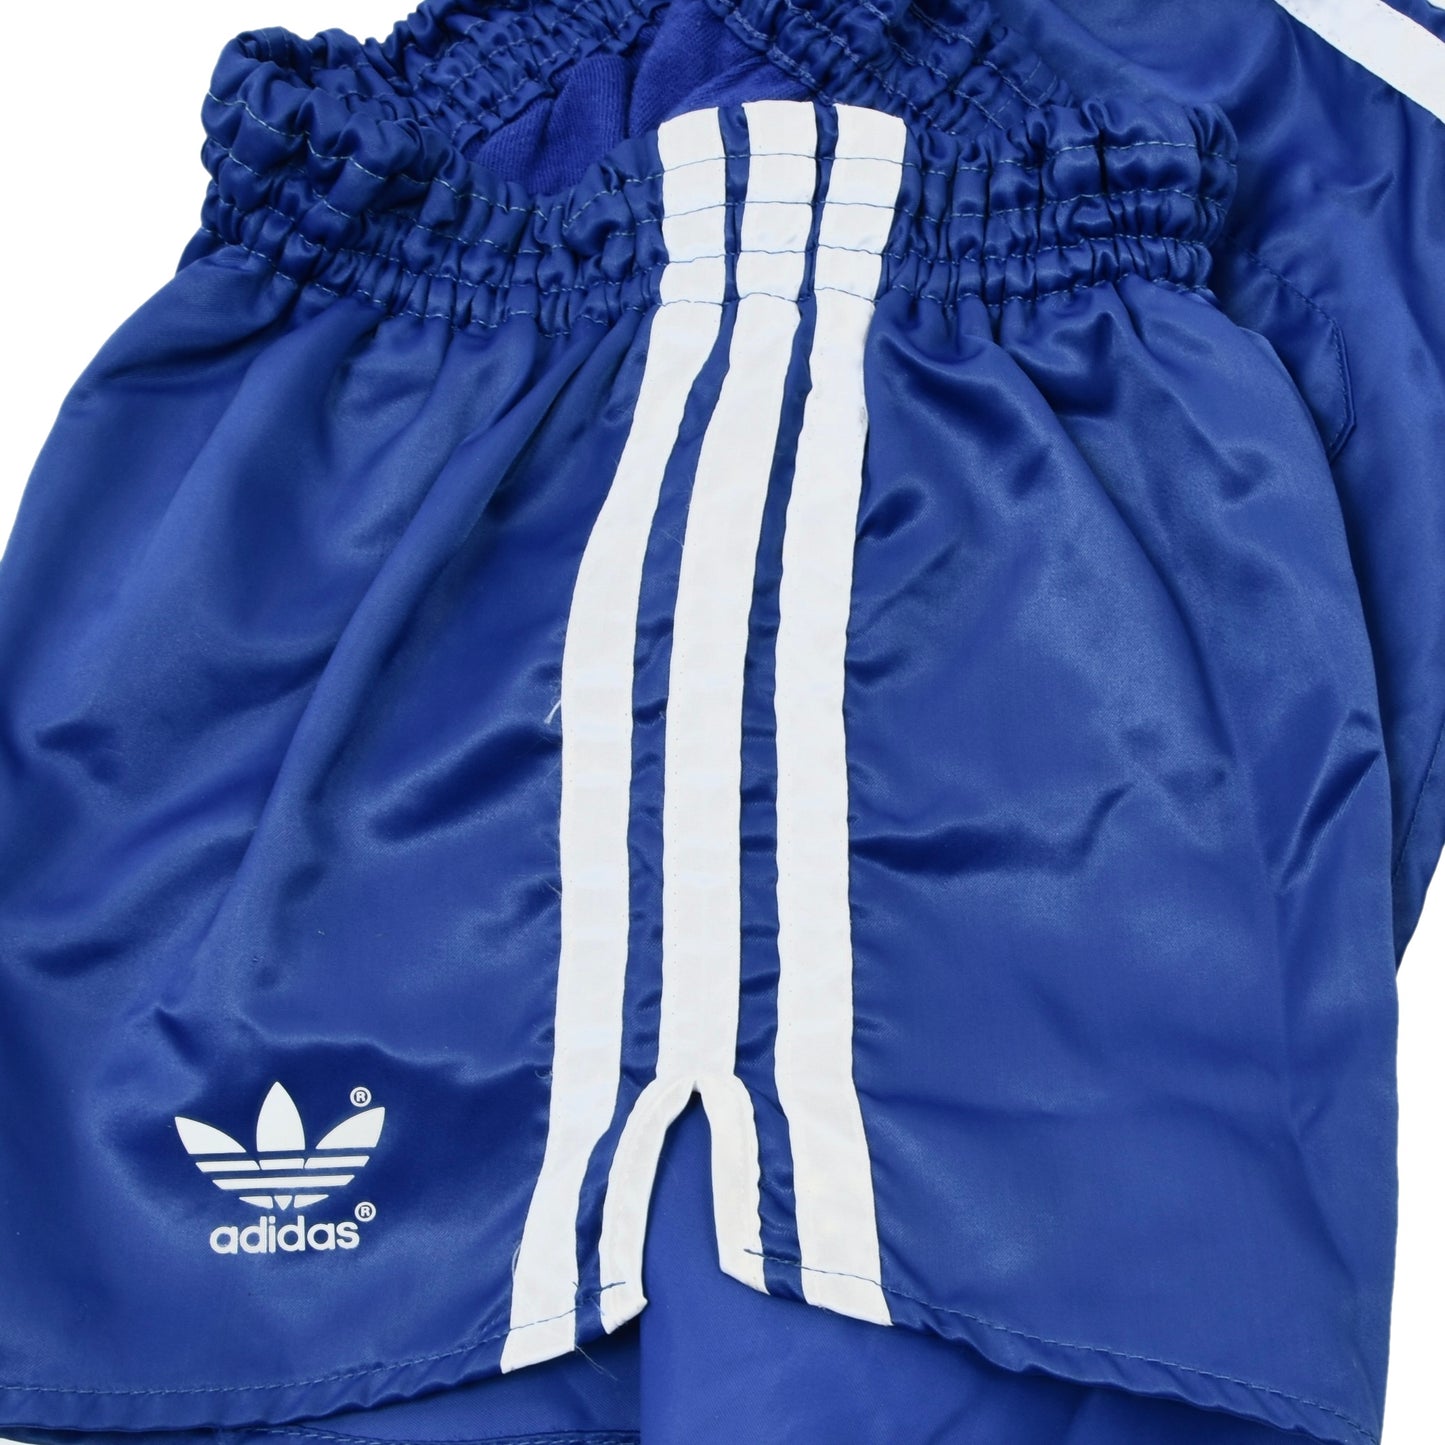 Vintage Adidas Sprinter Shorts Size D5 - Blue